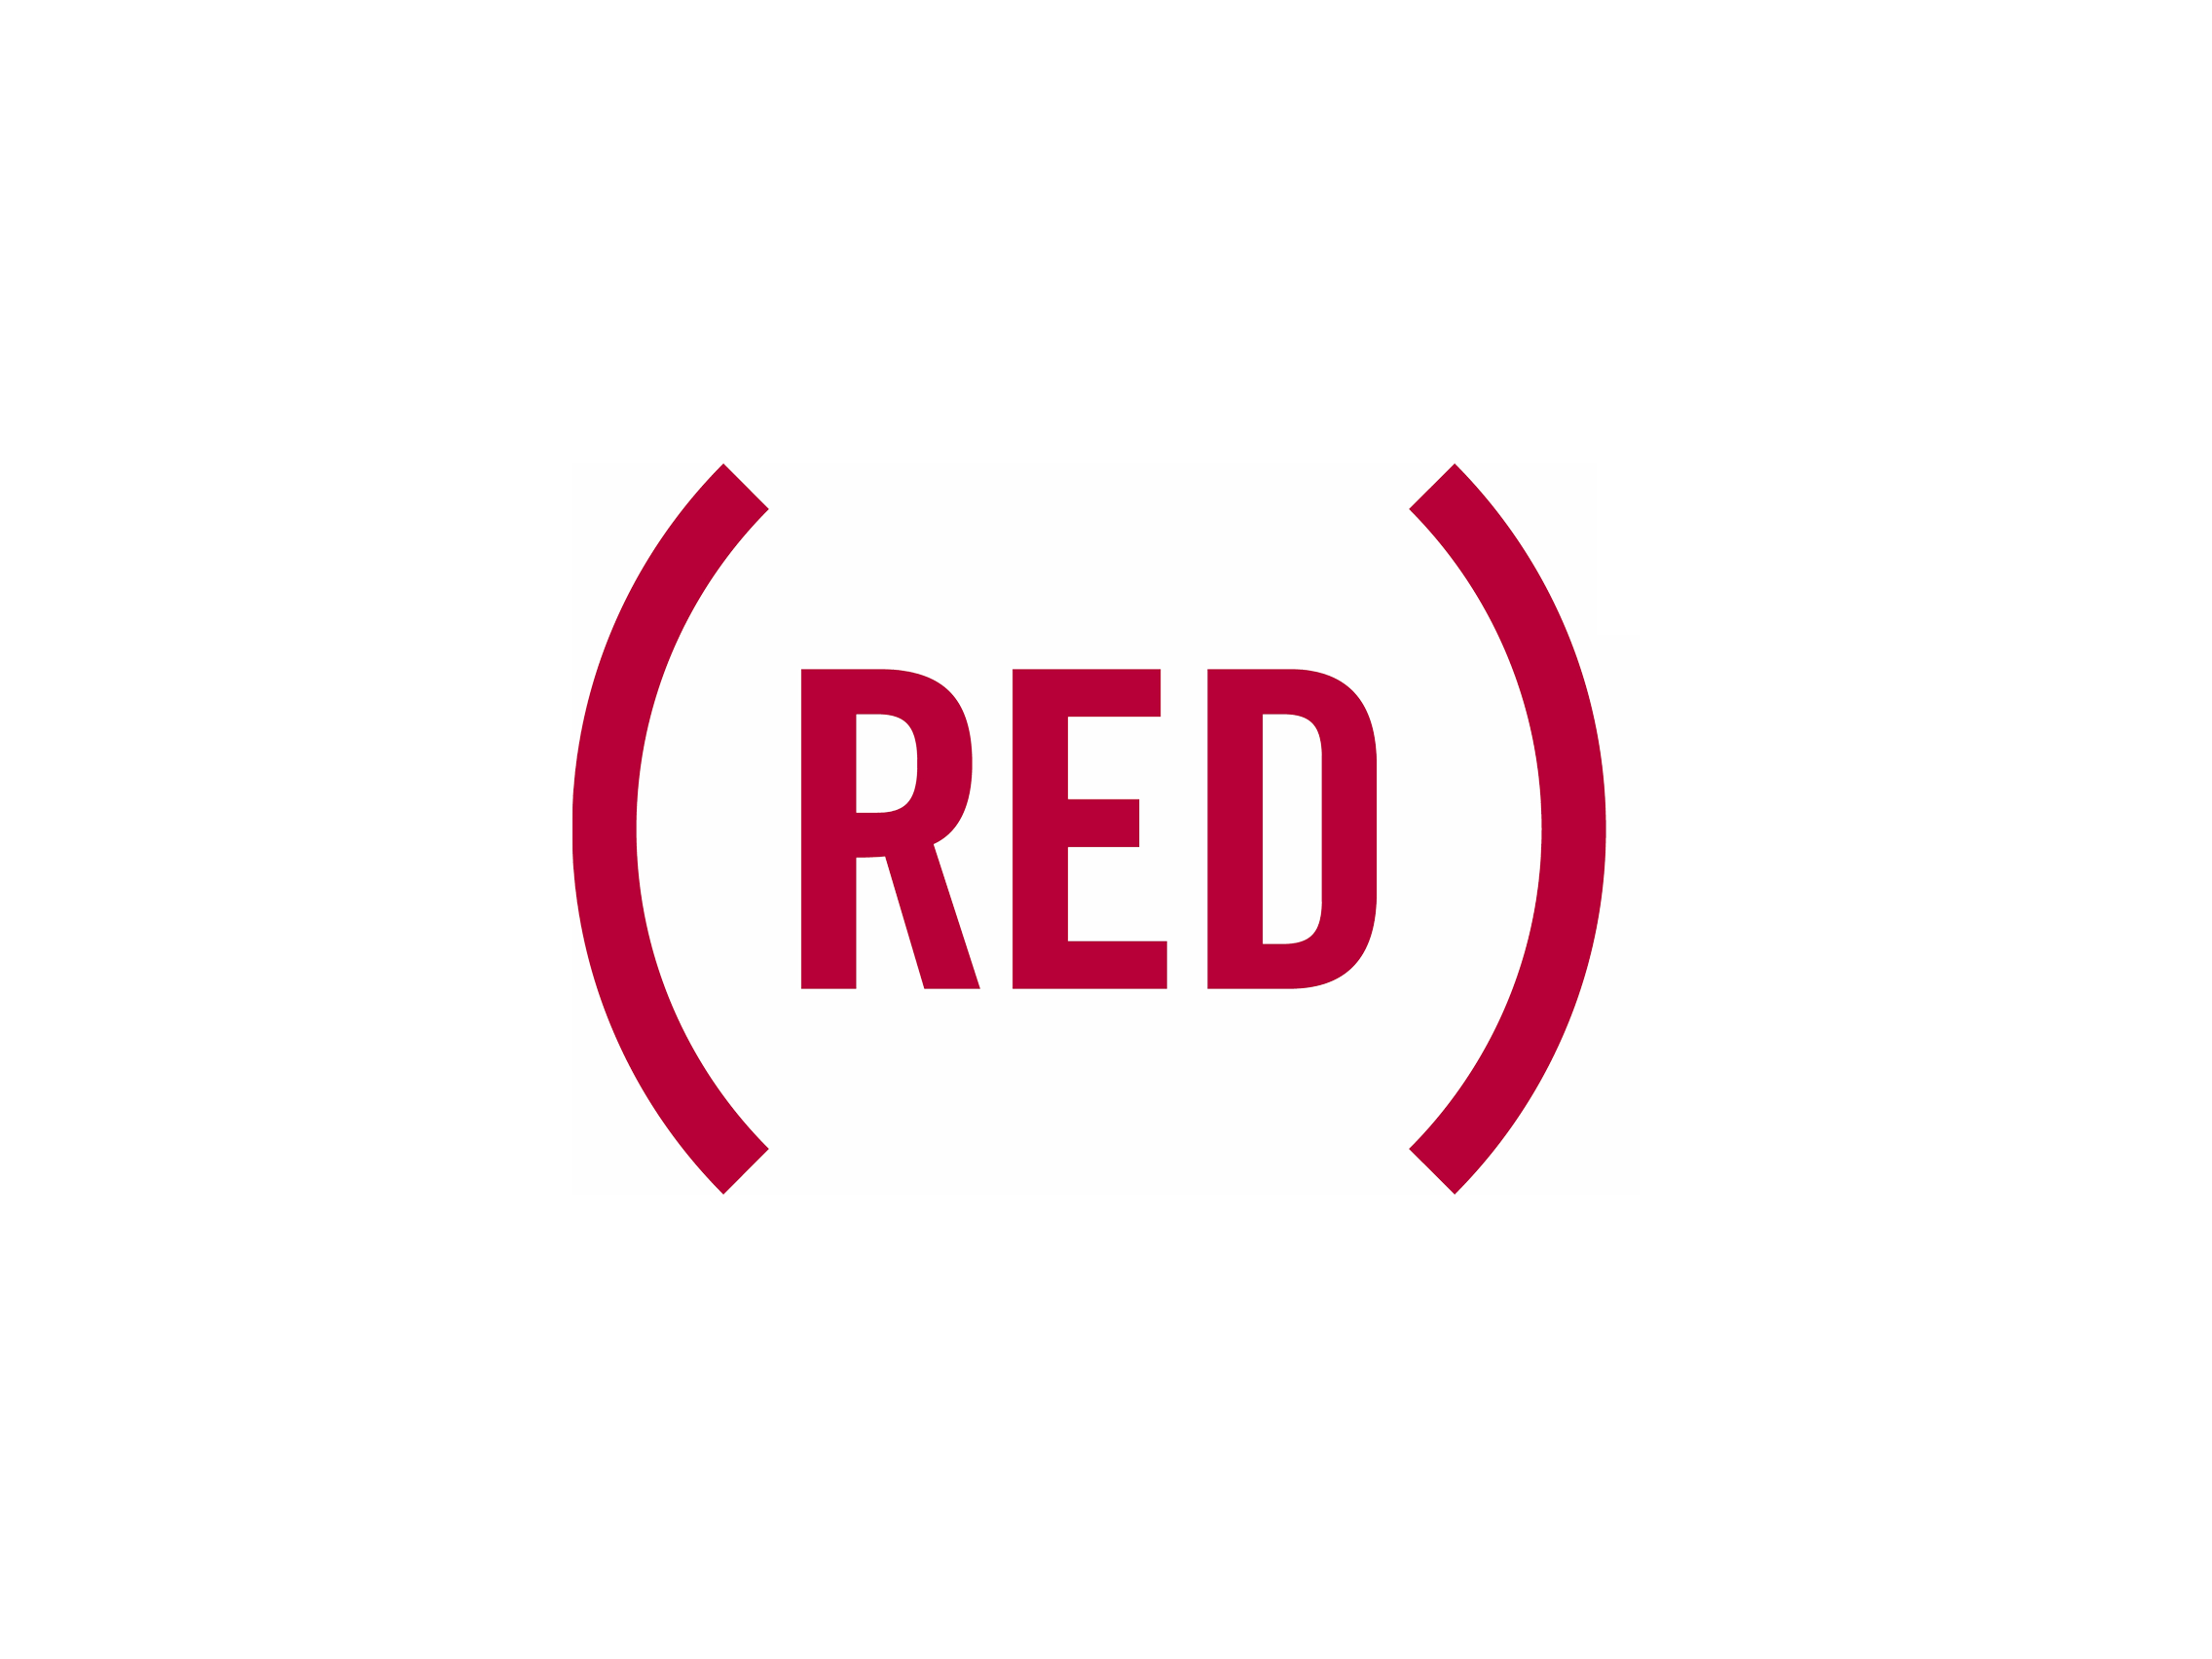 Red Logo - Pin by Henry Tsang on MU-BULLSEYE | Pinterest | Red, Red logo and ...